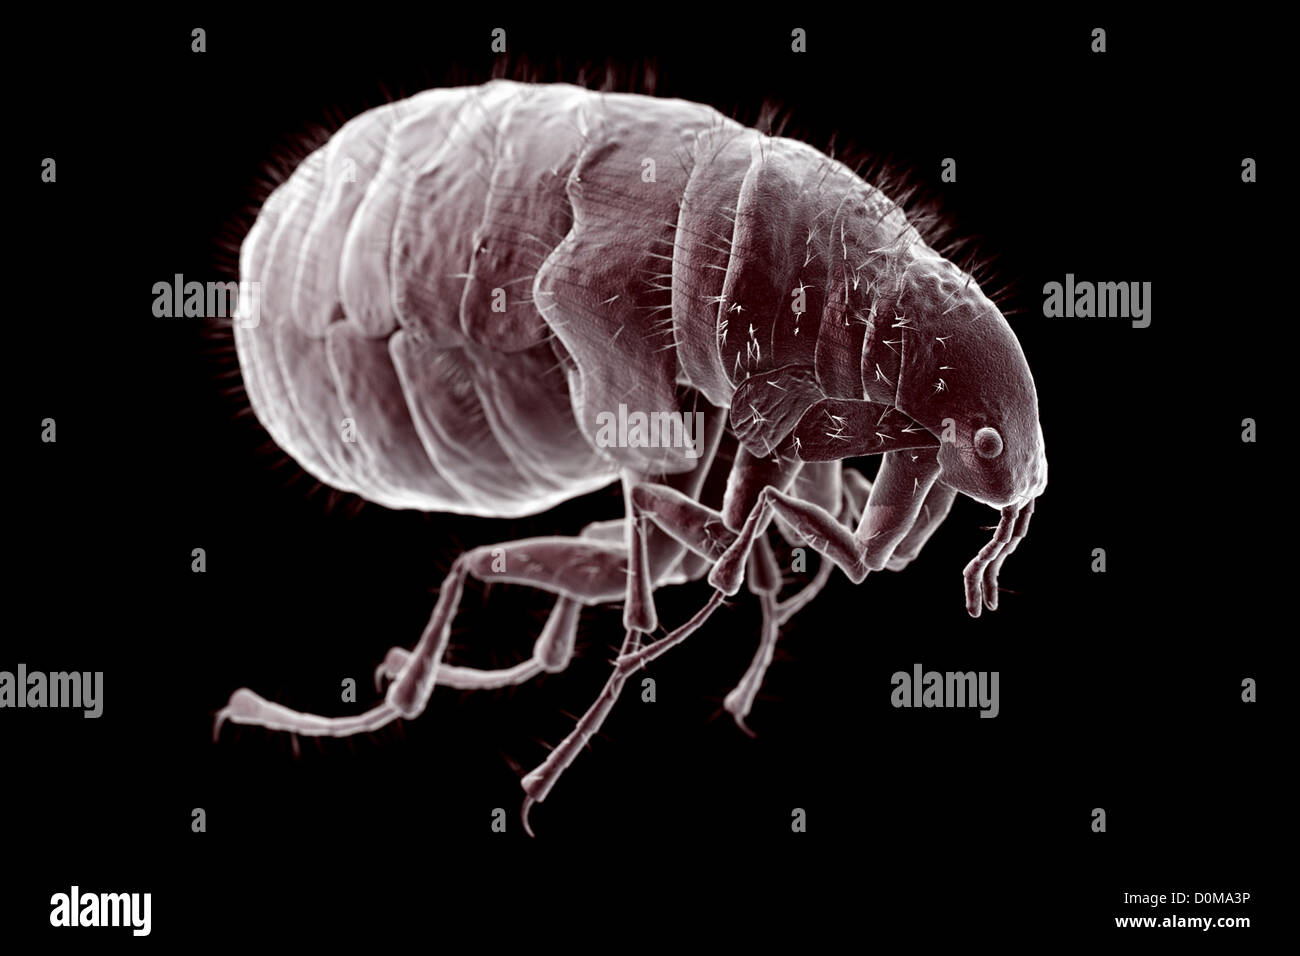 Close-up microscopic view of a flea (Pulex irritans) Stock Photo